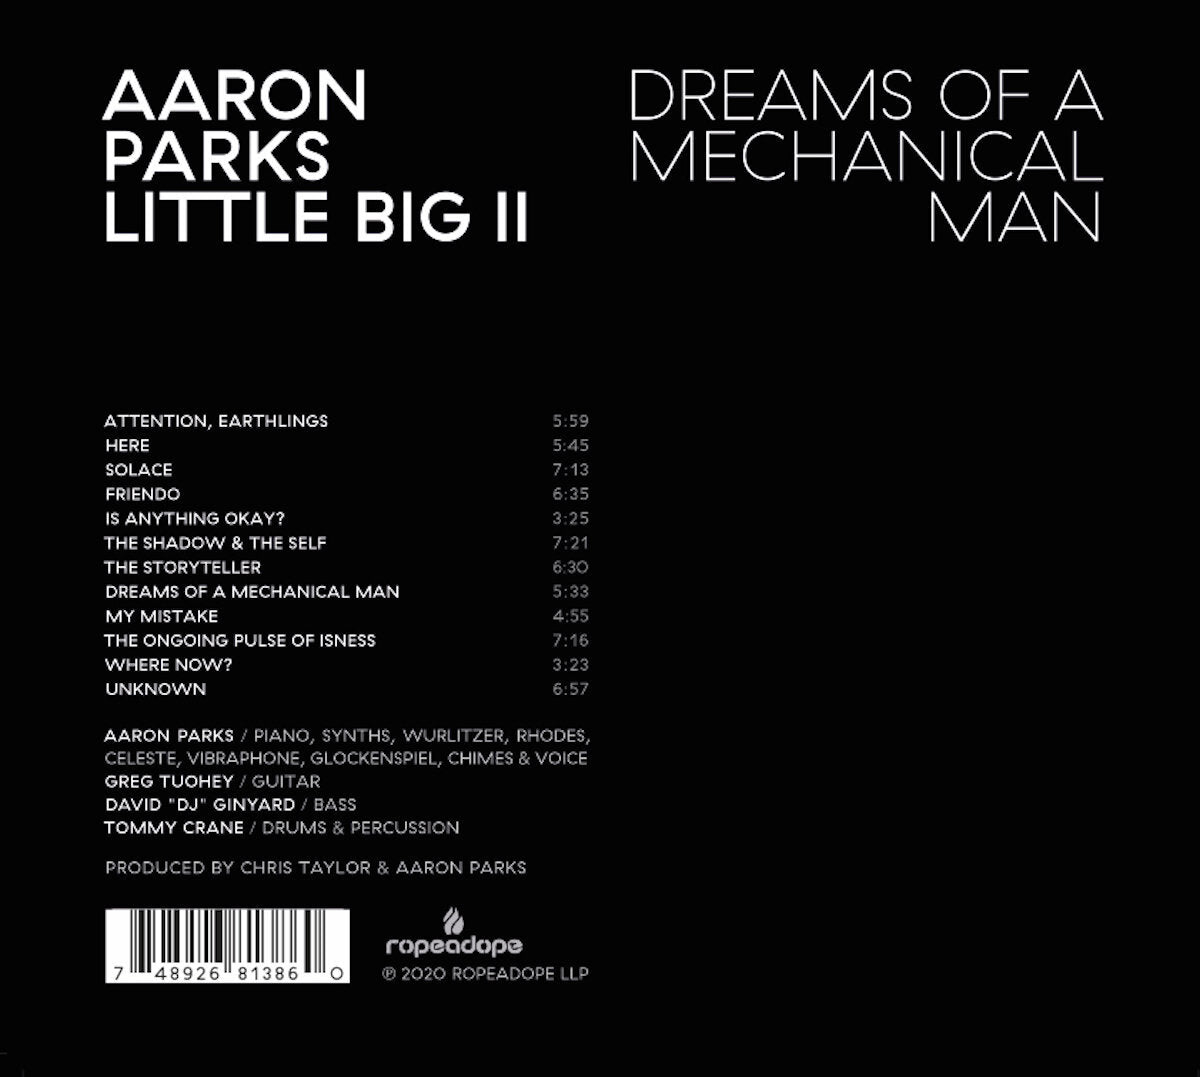 Aaron Parks | Little Big II: Dreams of a Mechanical Man - CD